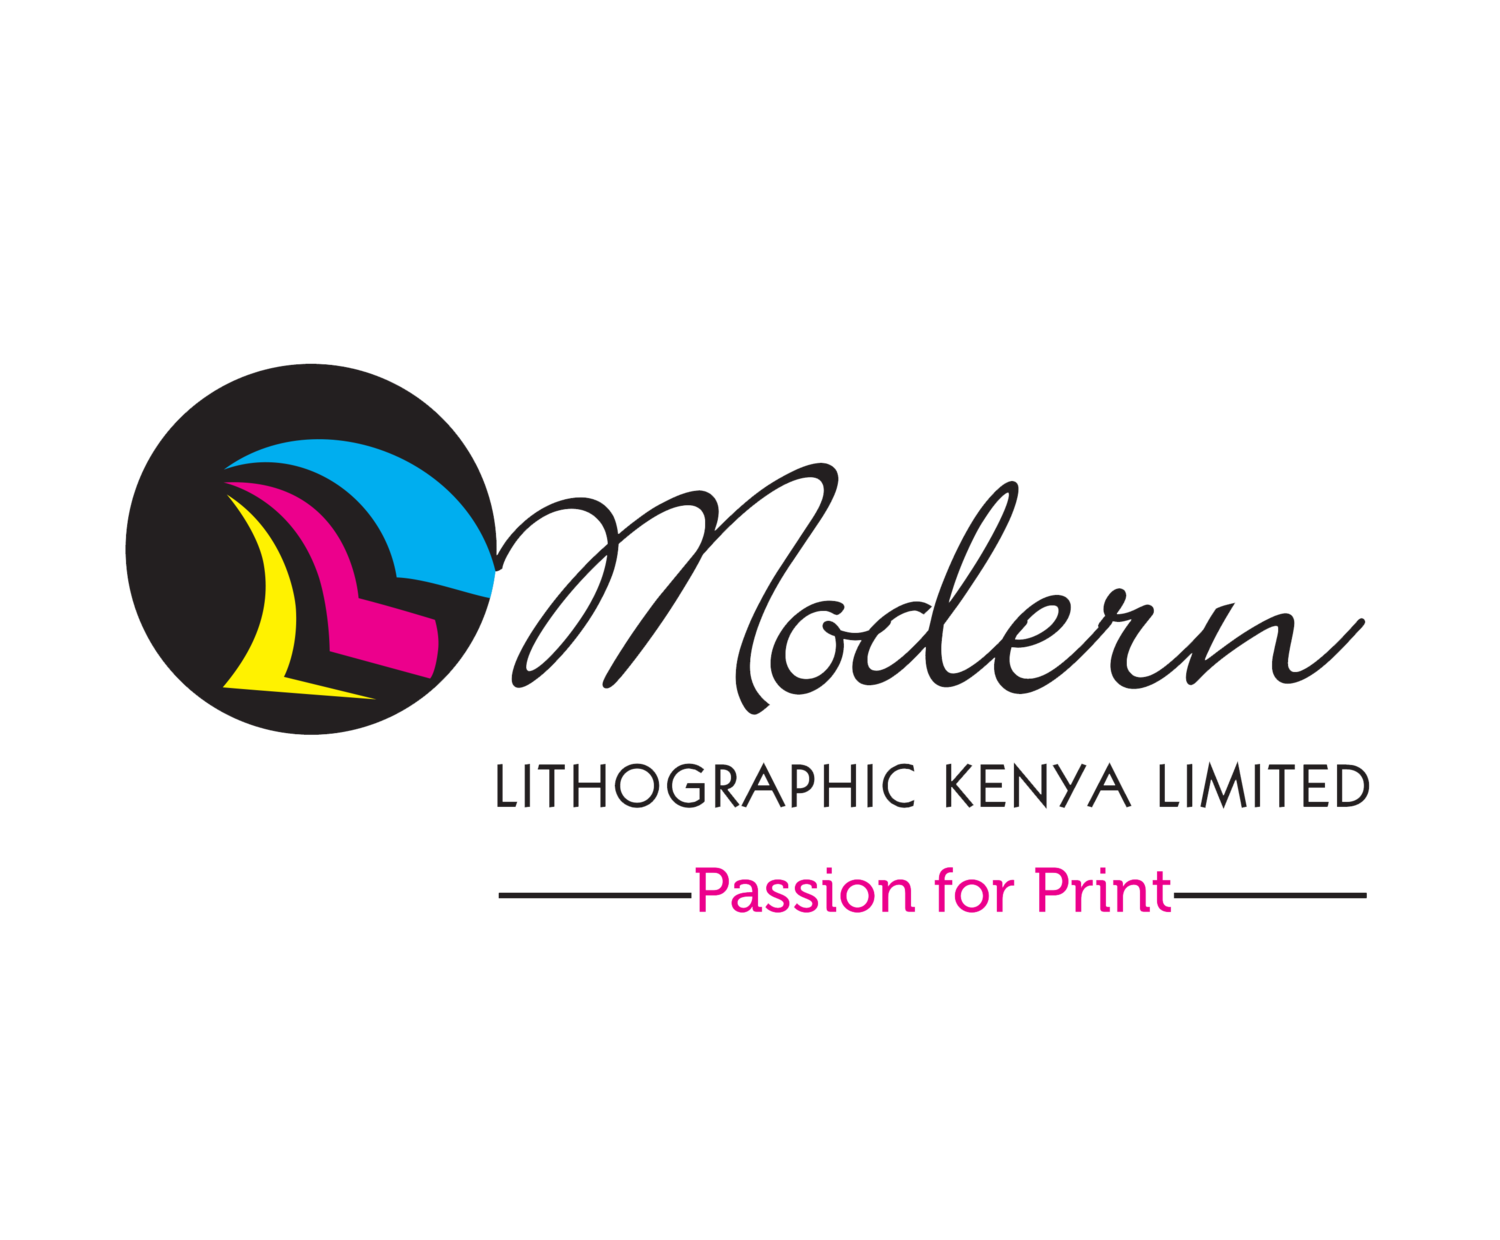 Modern Lithographic (K) Ltd